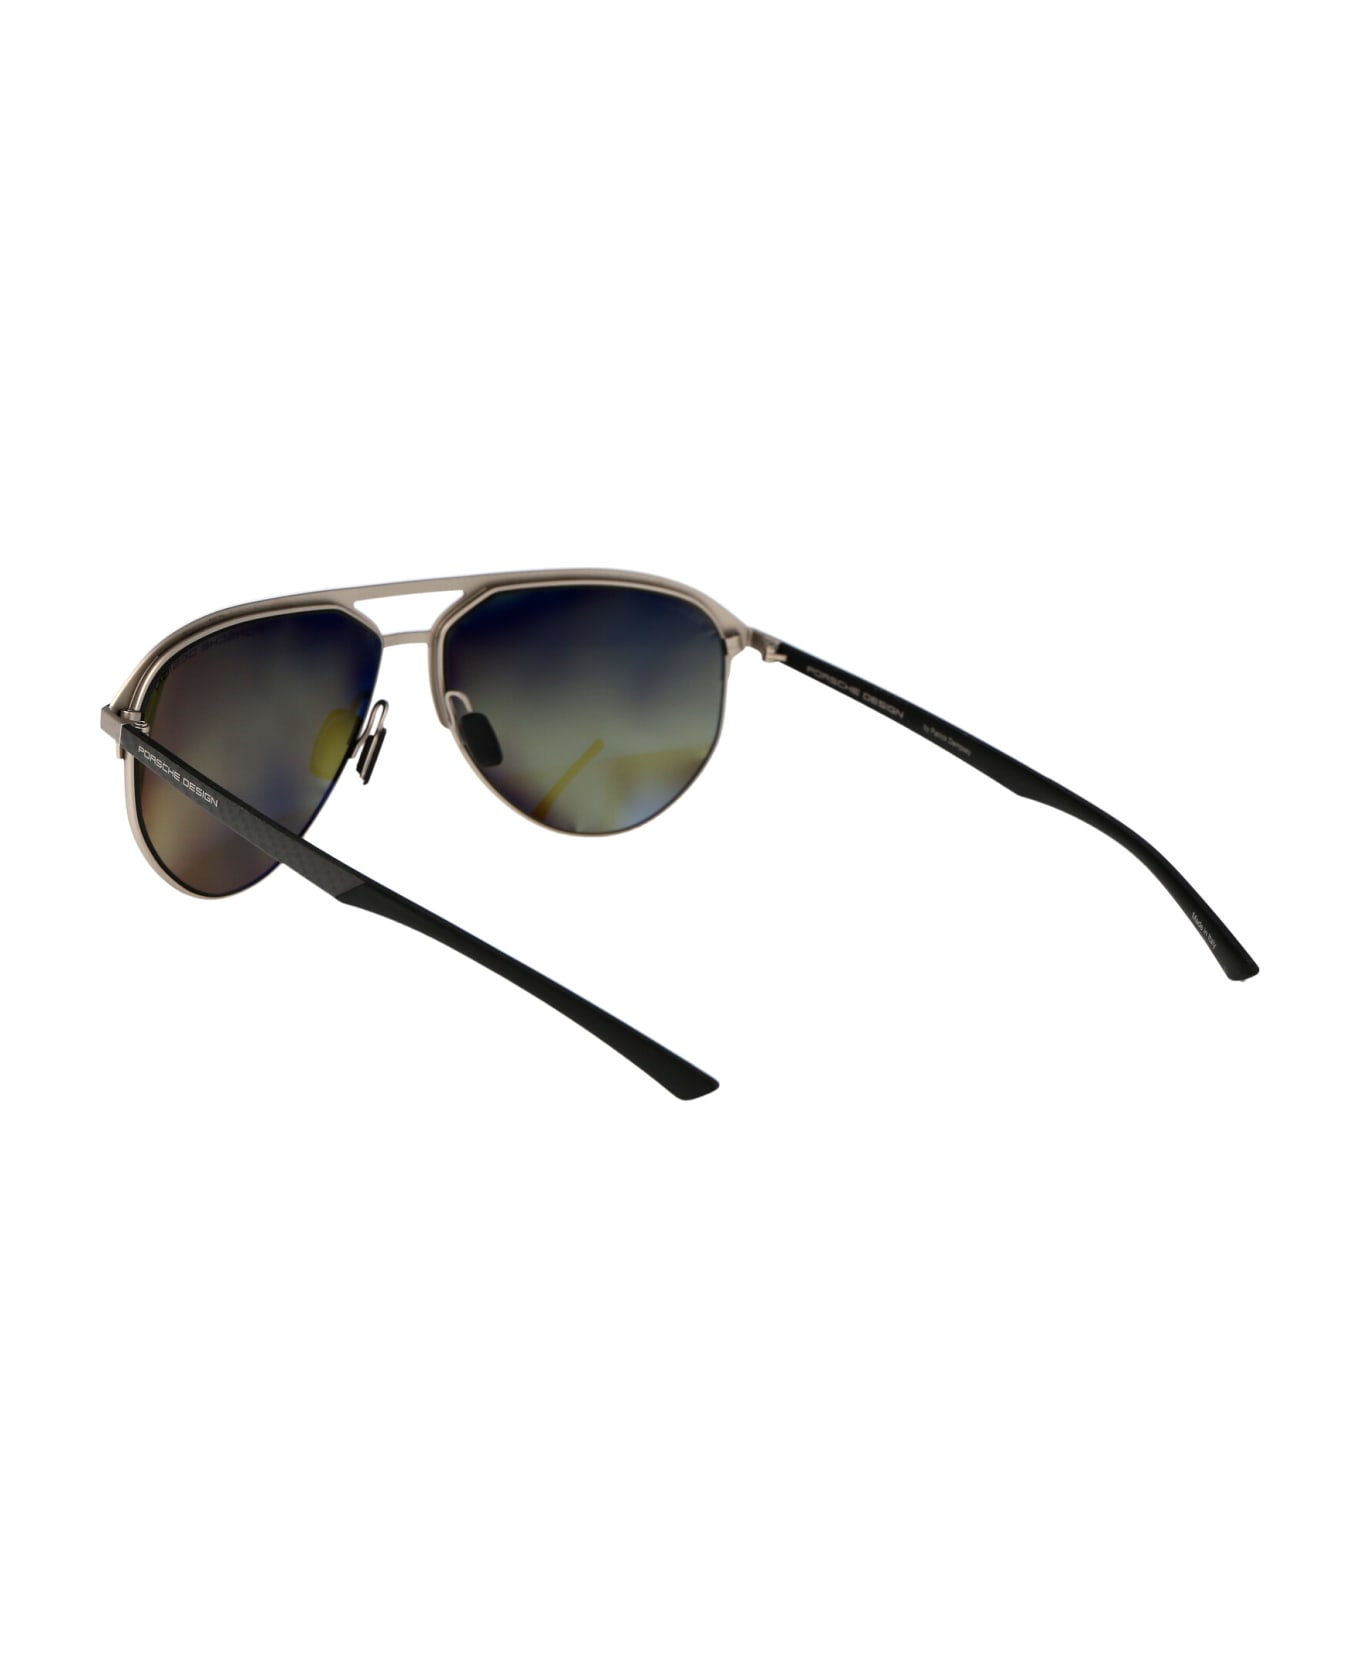 Porsche Design P8965 Sunglasses - B417 GREY BLACK サングラス